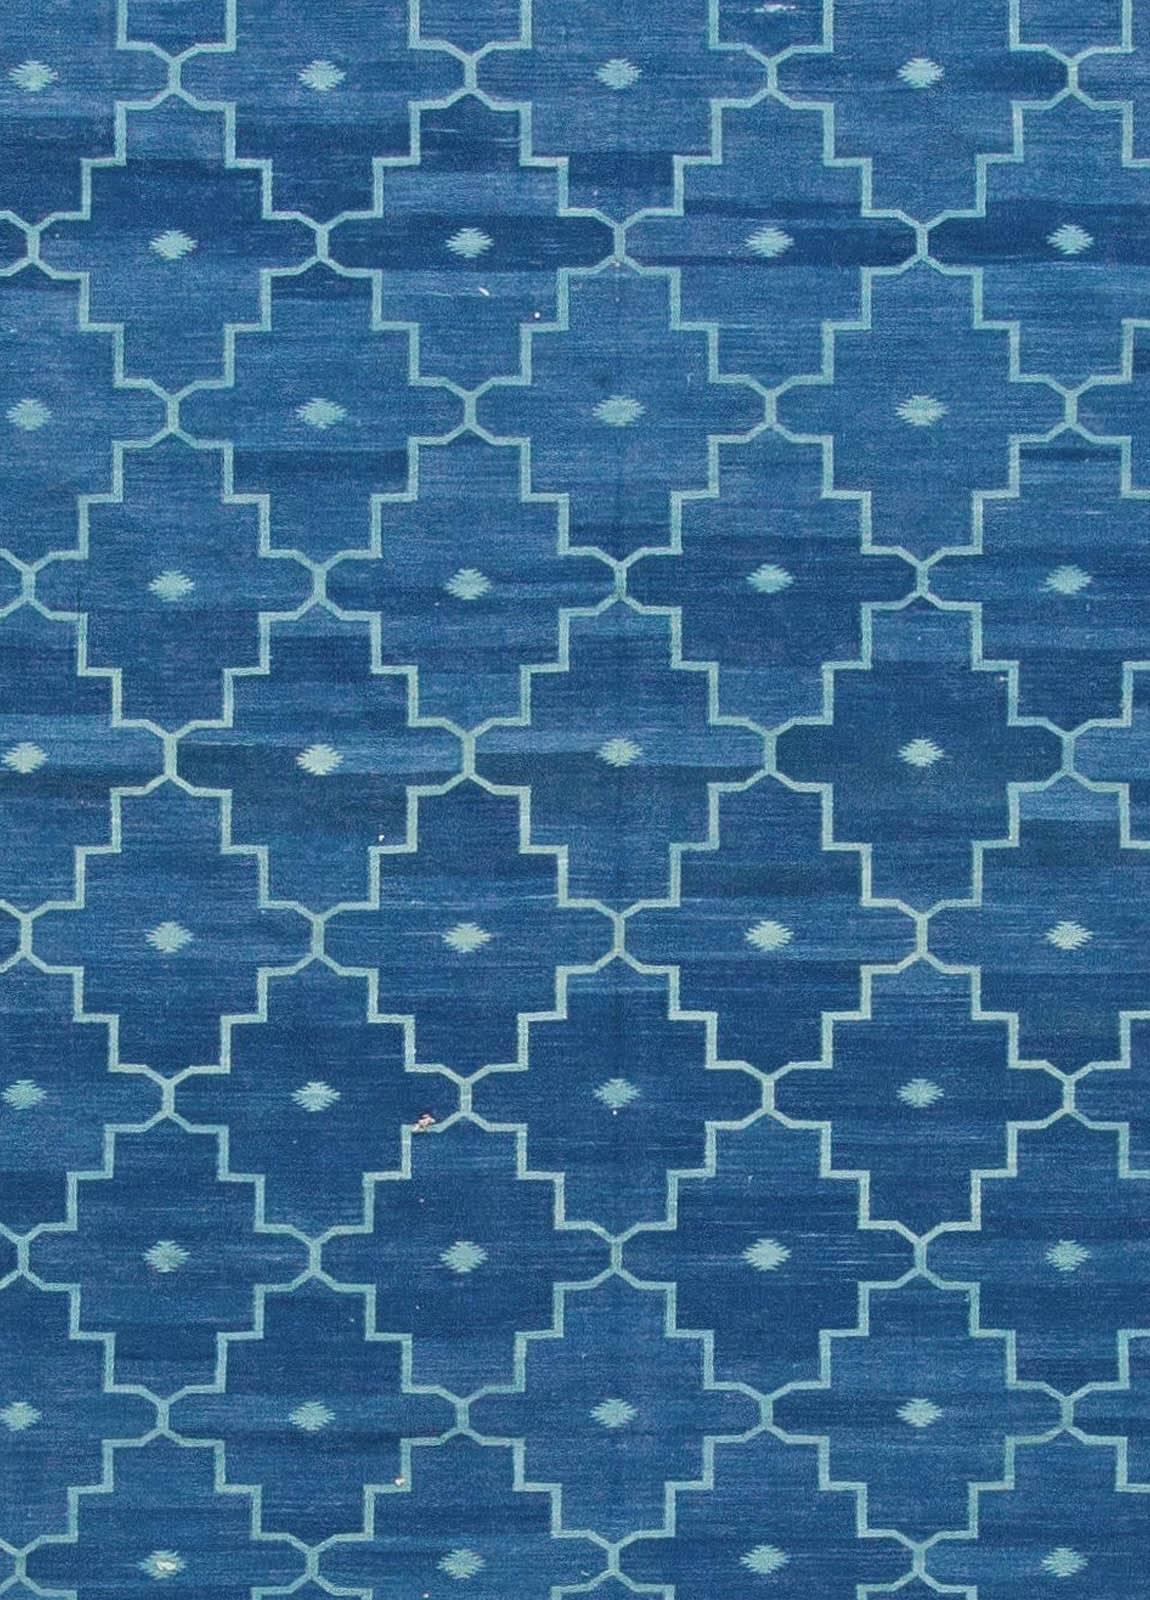 Contemporary Indian Dhurrie blue flat-weave rug by Doris Leslie Blau.
Size: 13'10